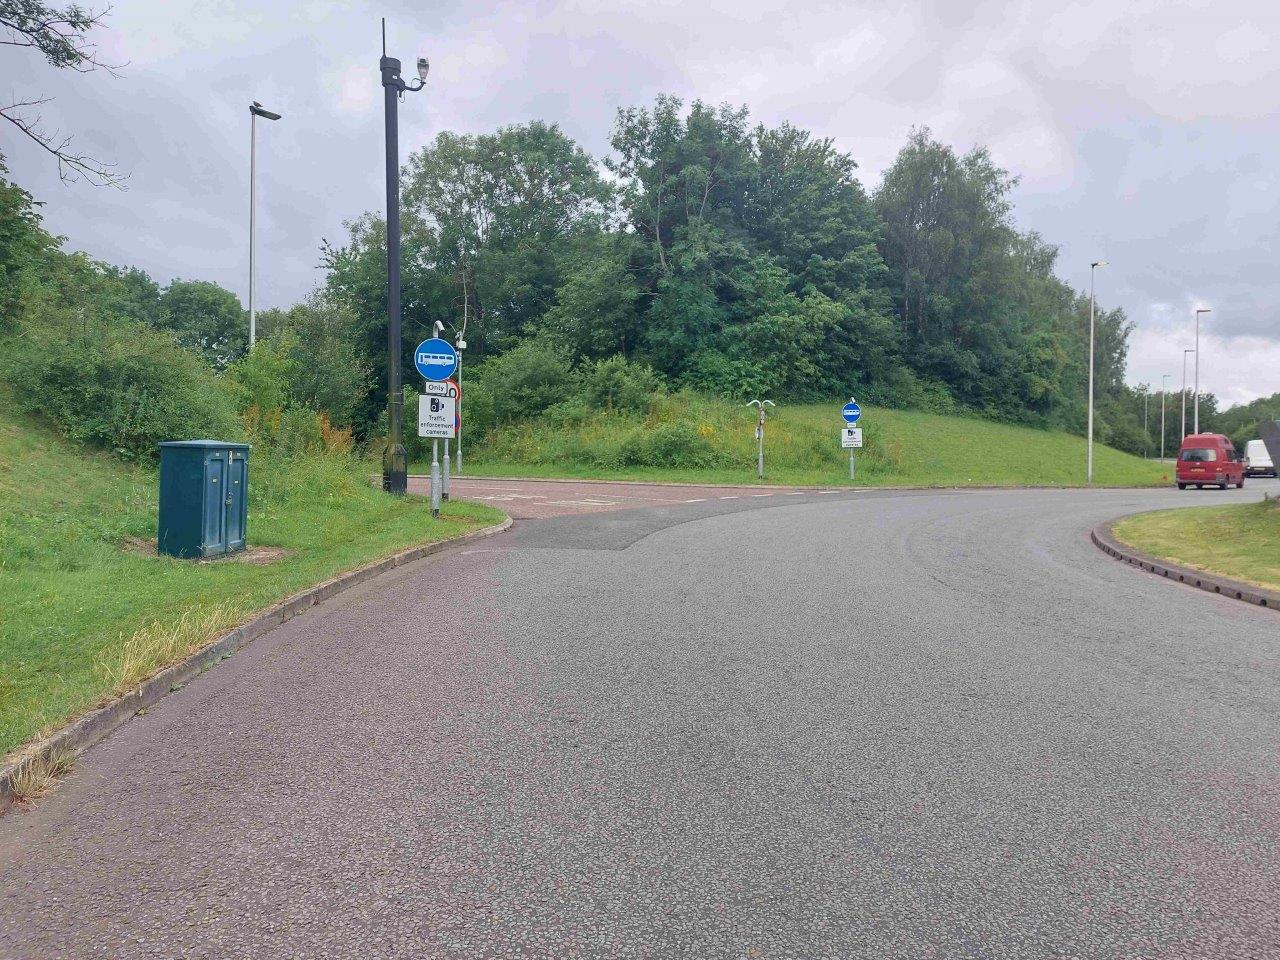 Birchwood bus lane - signage at the entrance and exit of the bus lane on Birchwood Way